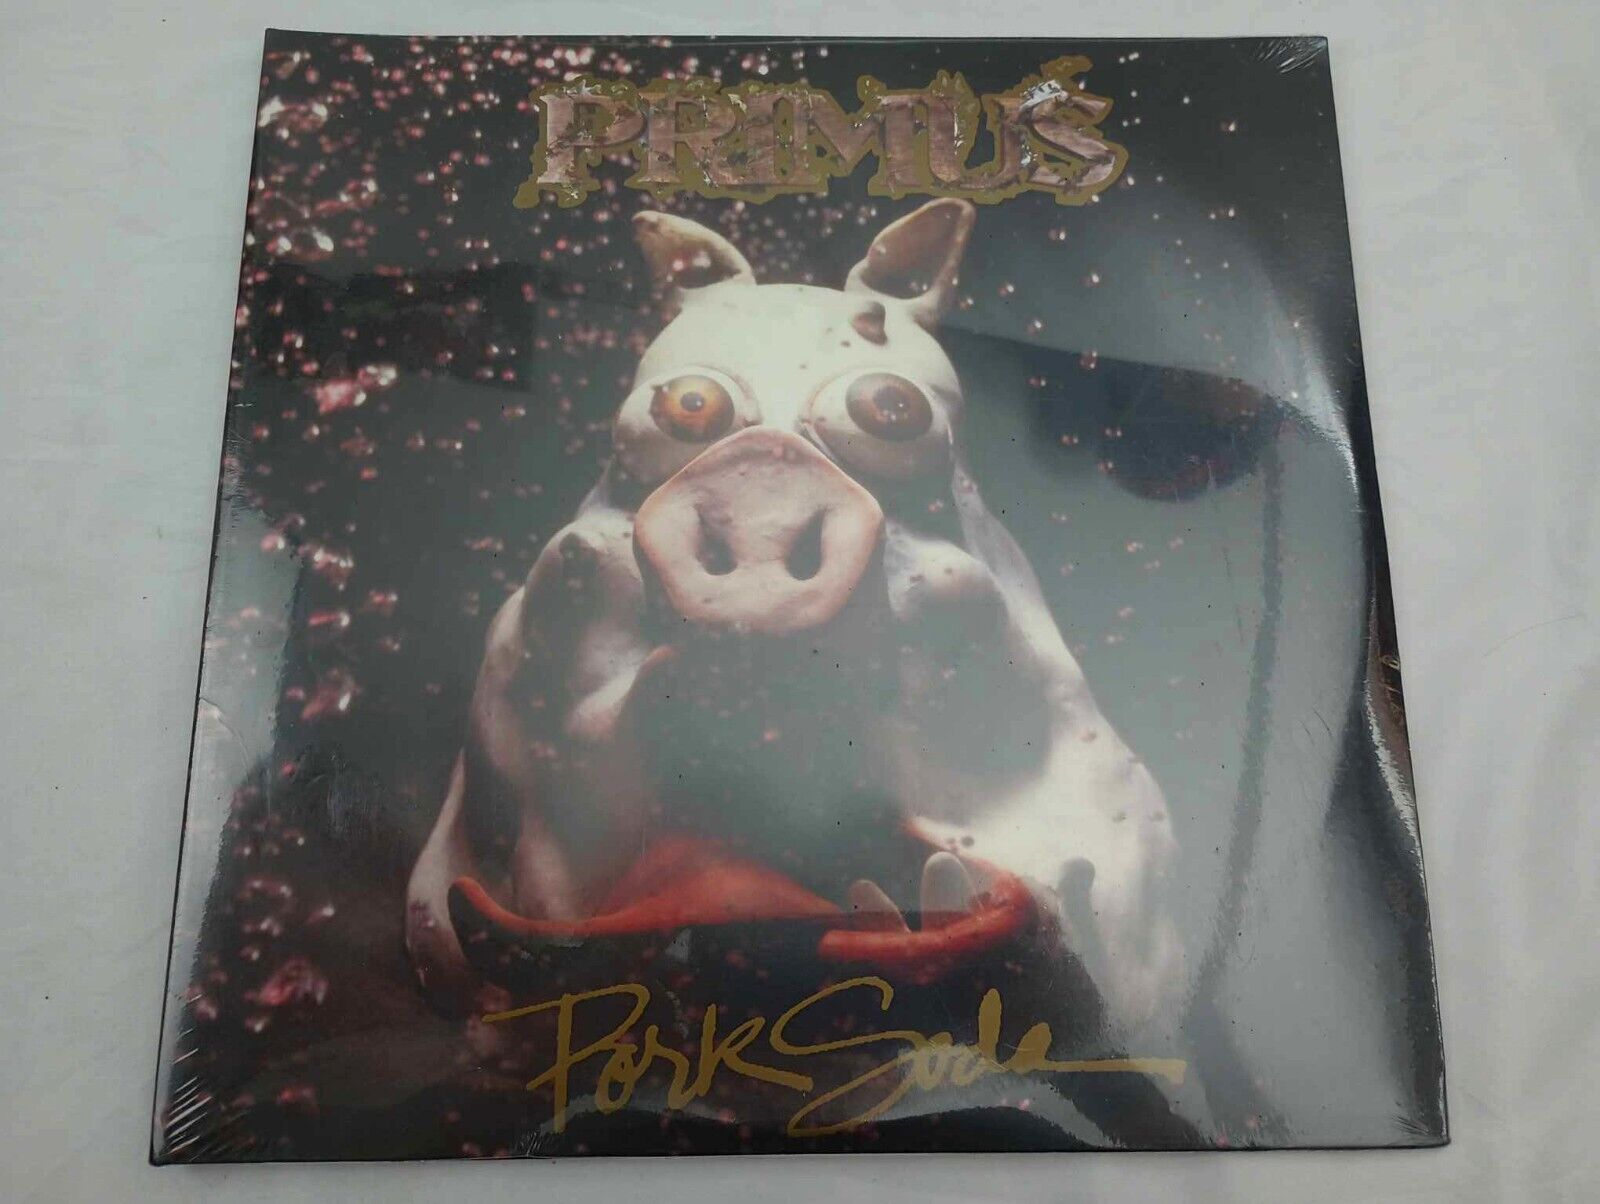 Primus Pork Soda New Vinyl LP interscope records 2018 double LP Brand new